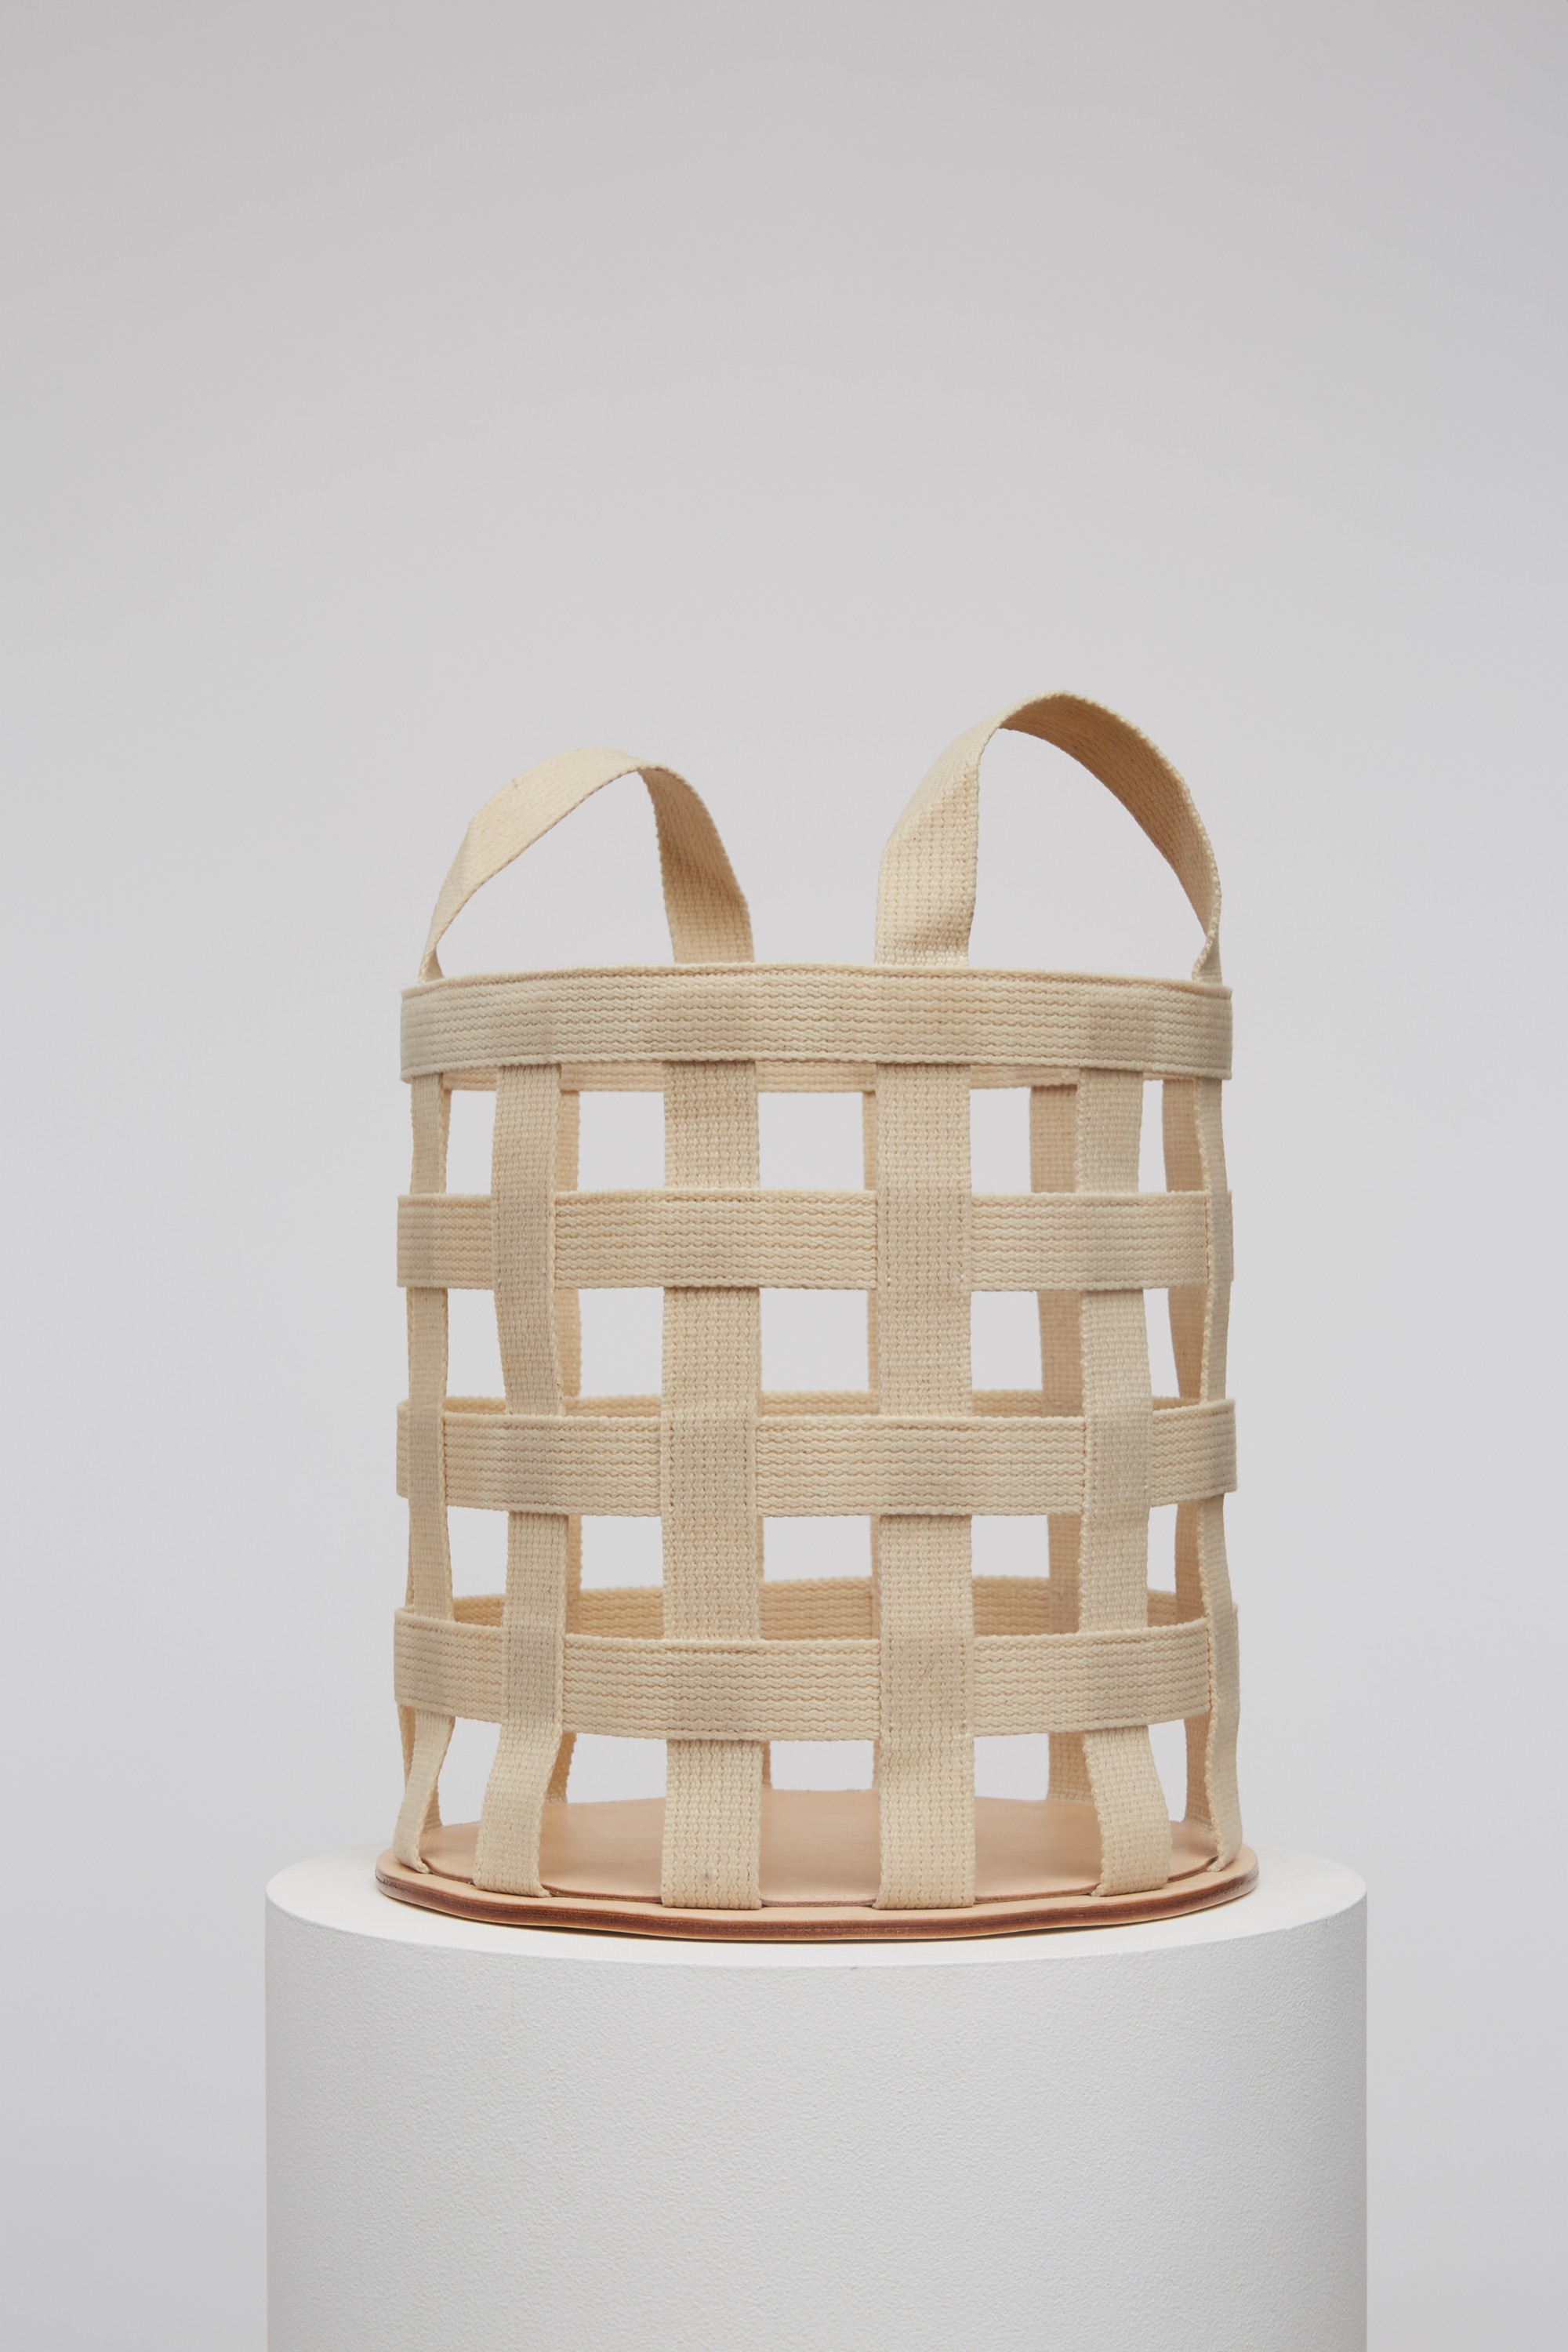 Building Block | Large Woven Basket